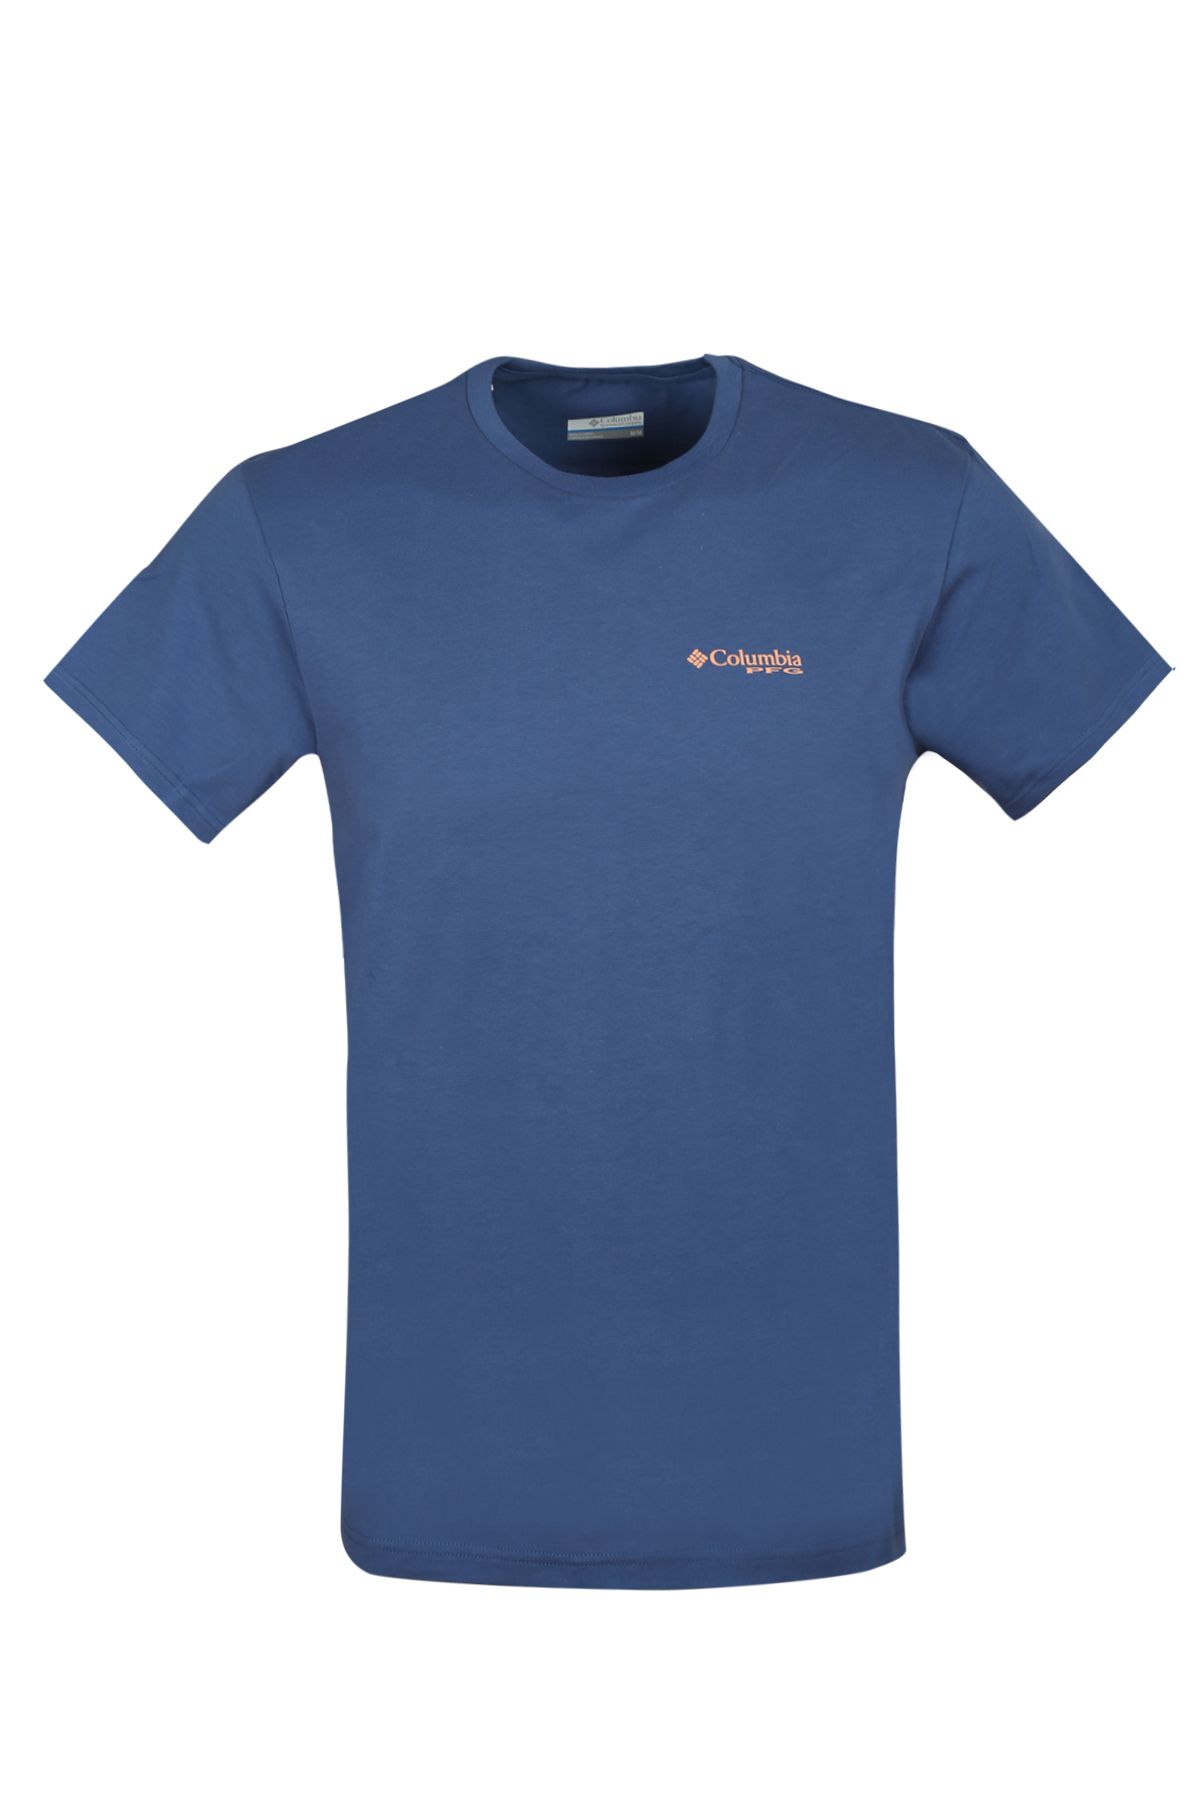 Columbia Erkek Mavi T-shirt 1481250452-452